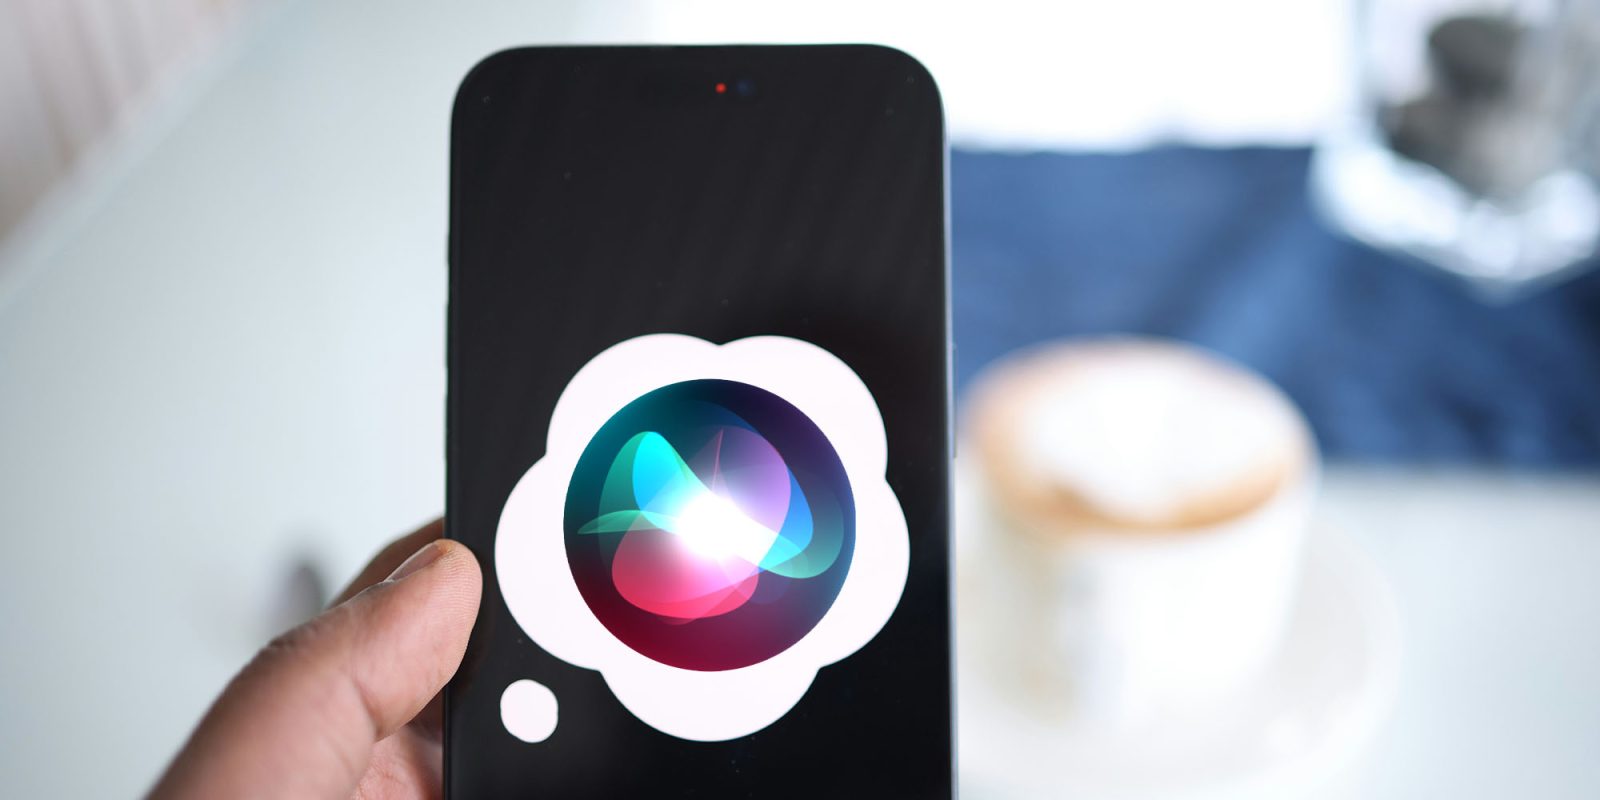 Ferret-UI could power advanced Siri | Concept image of Siri logo in thought bubble | Siri AI